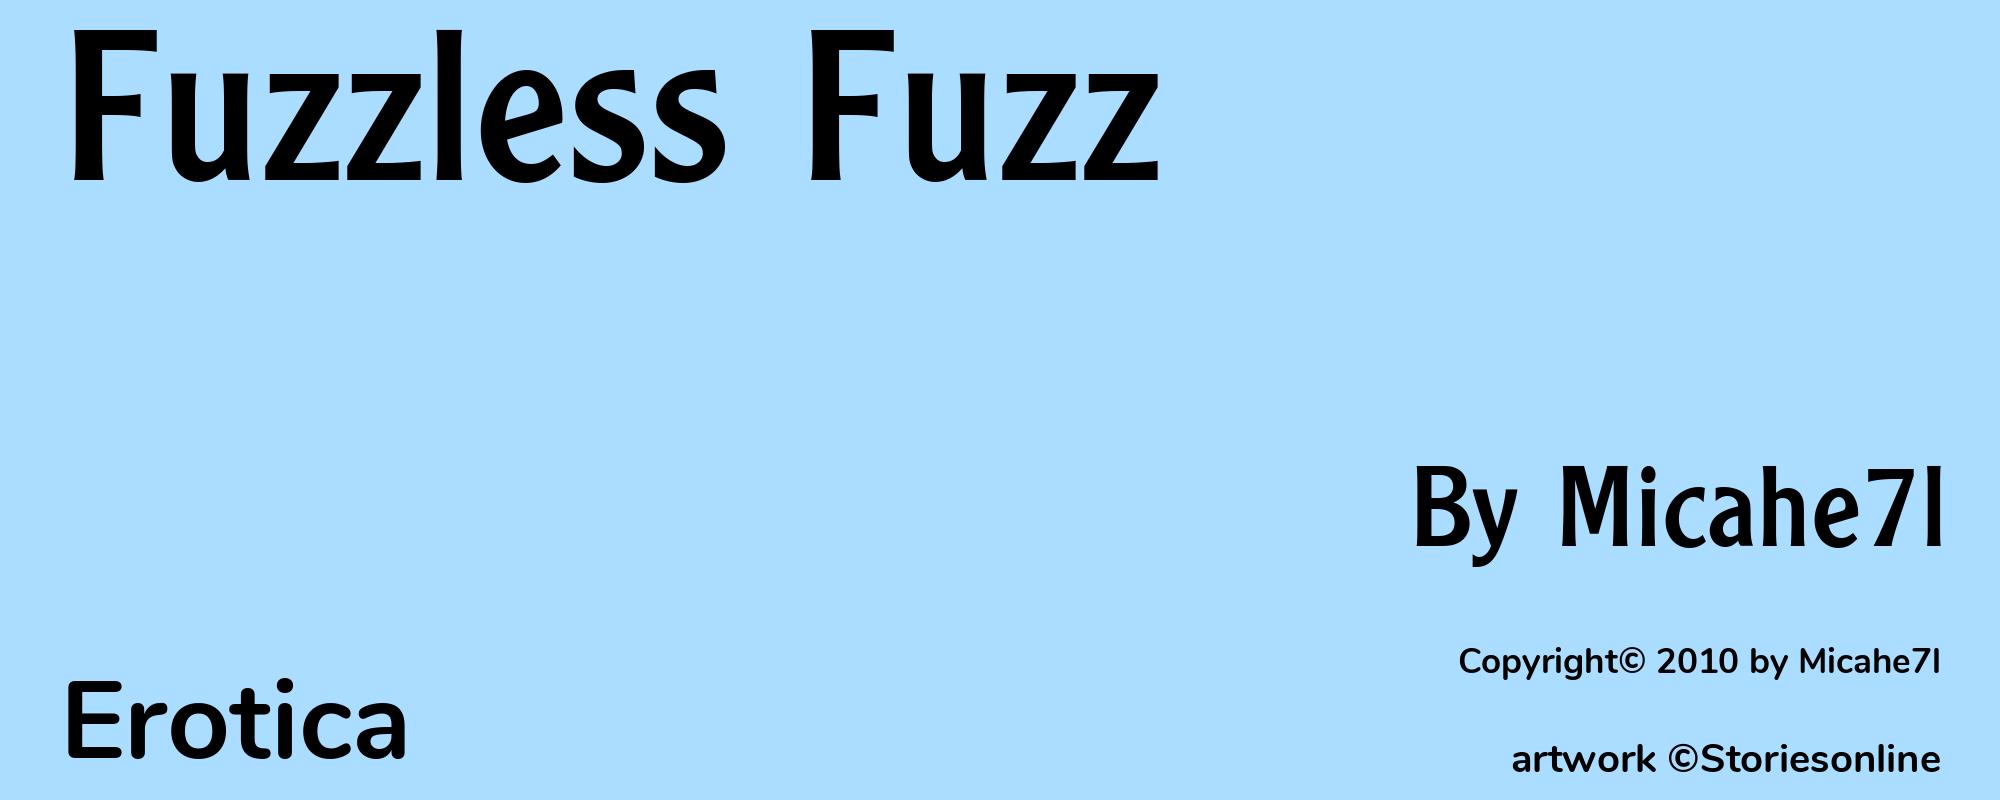 Fuzzless Fuzz - Cover